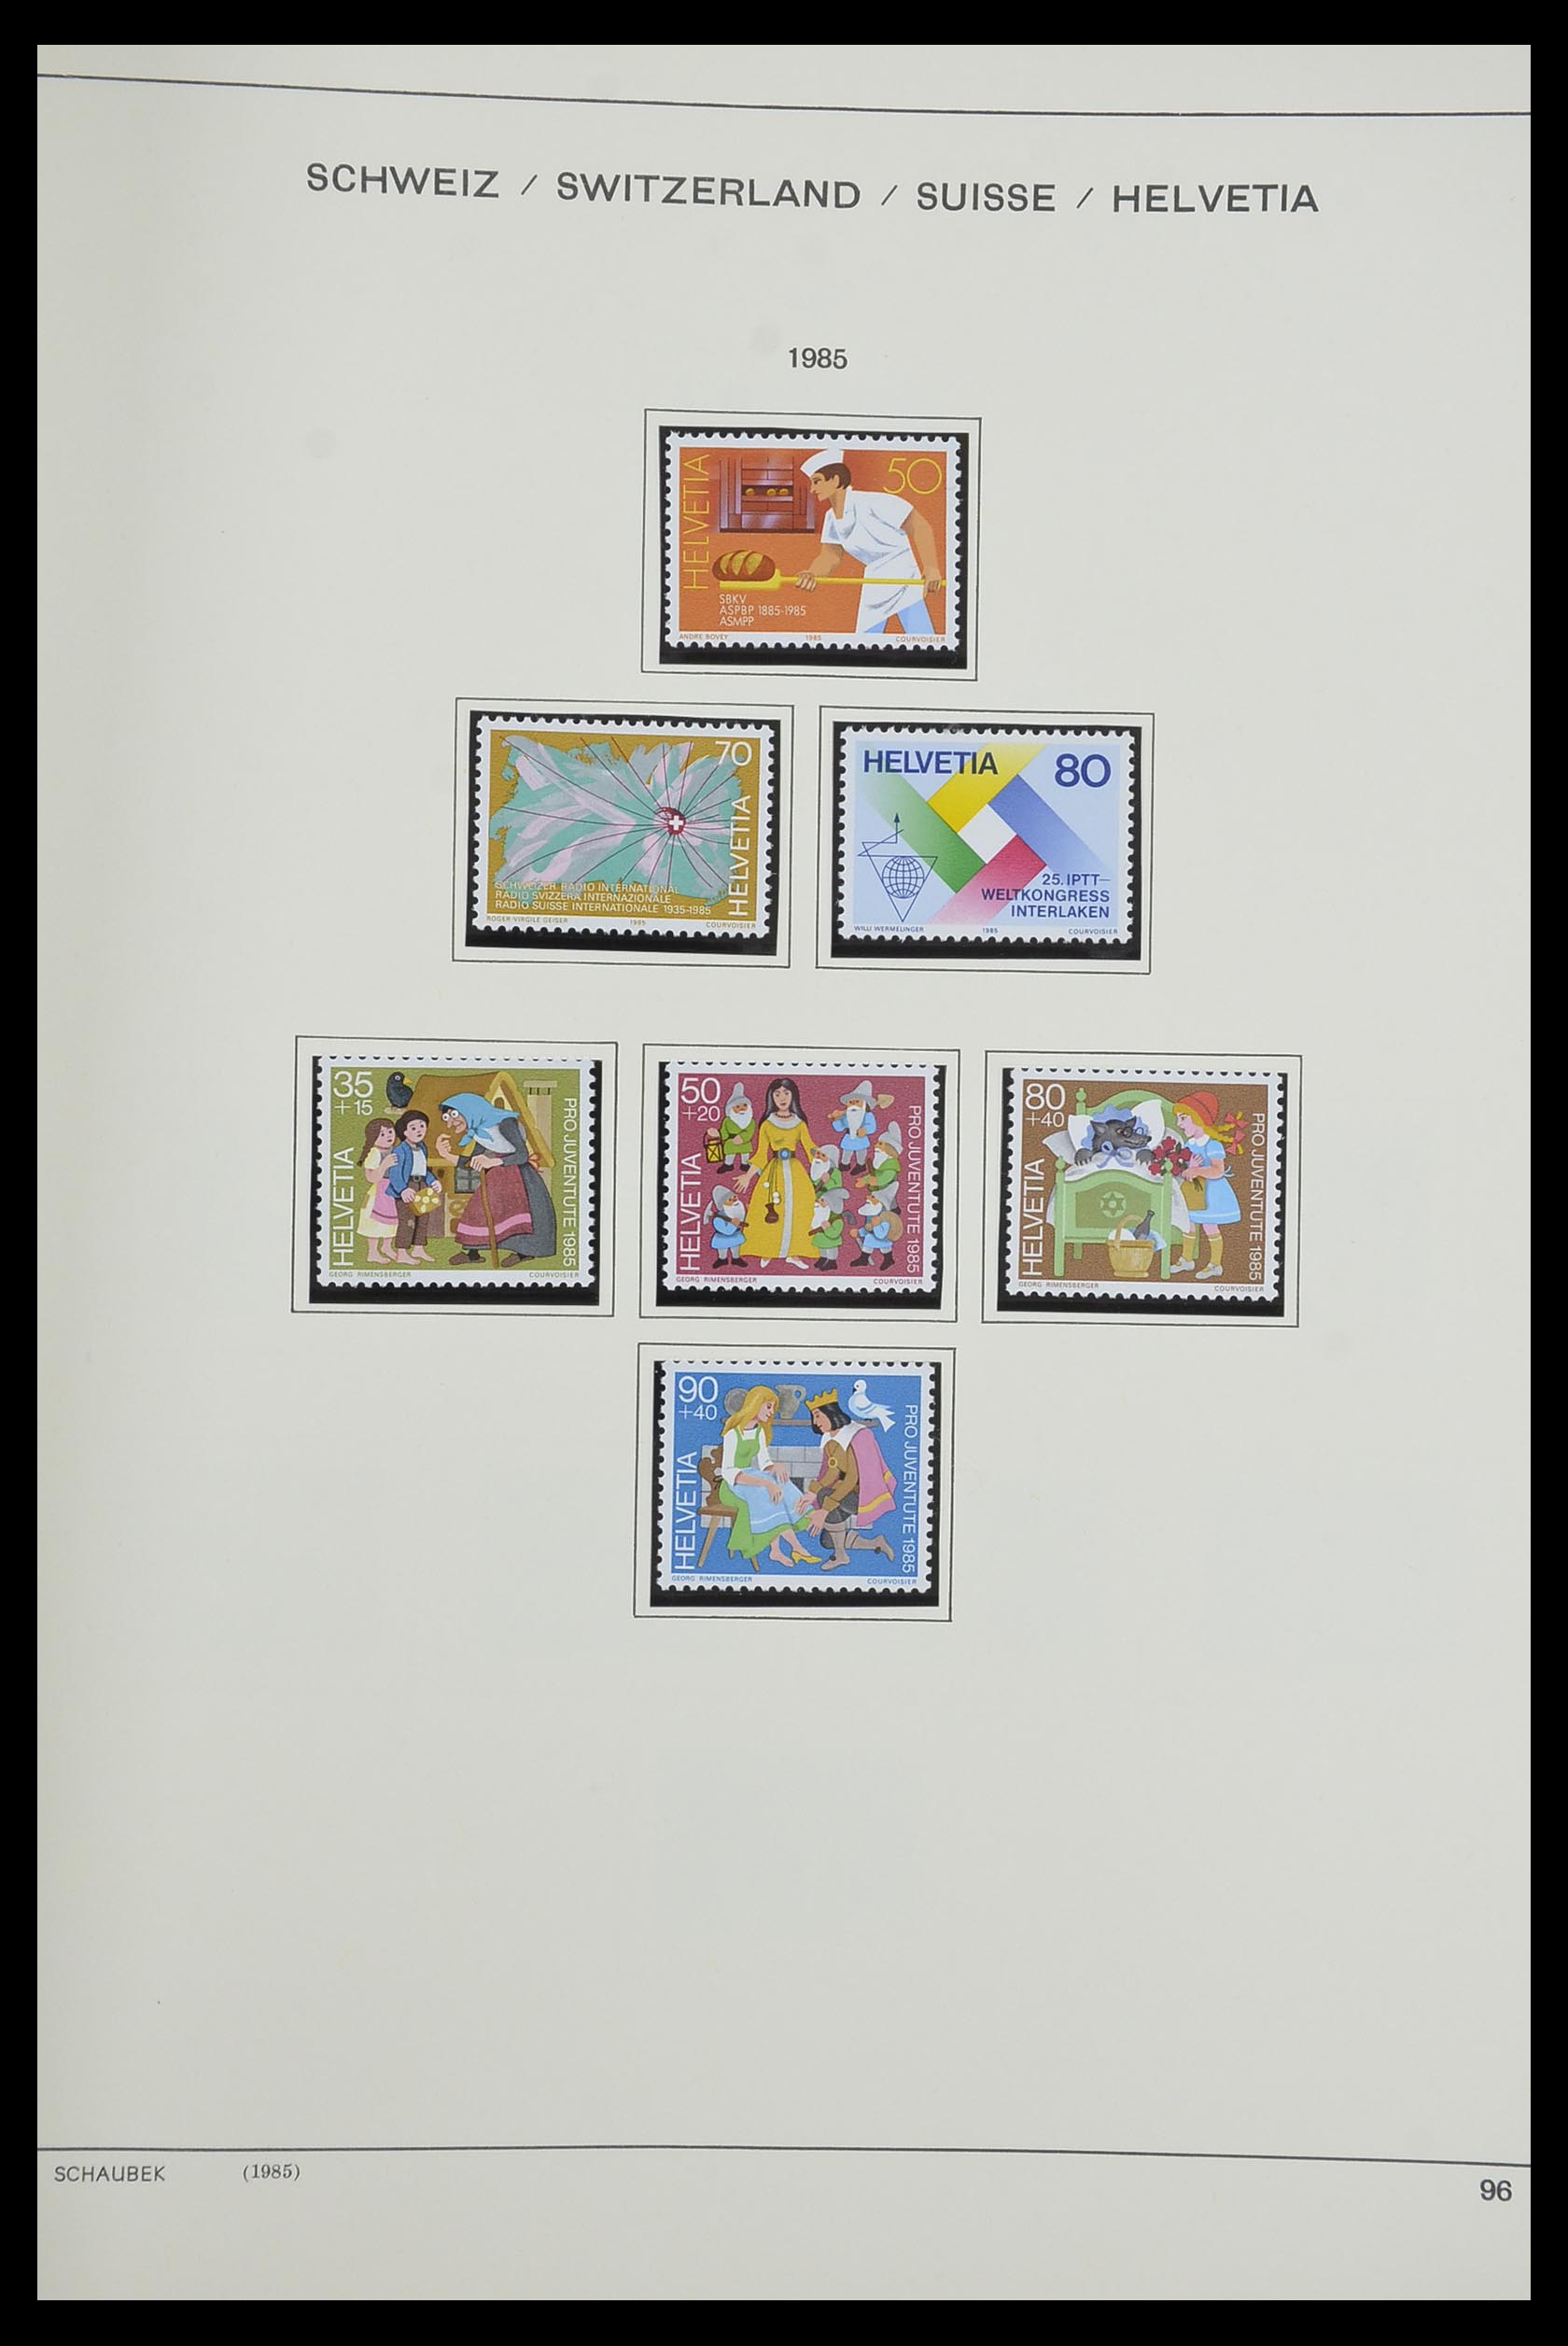 33601 086 - Stamp collection 33601 Switzerland 1854-1985.